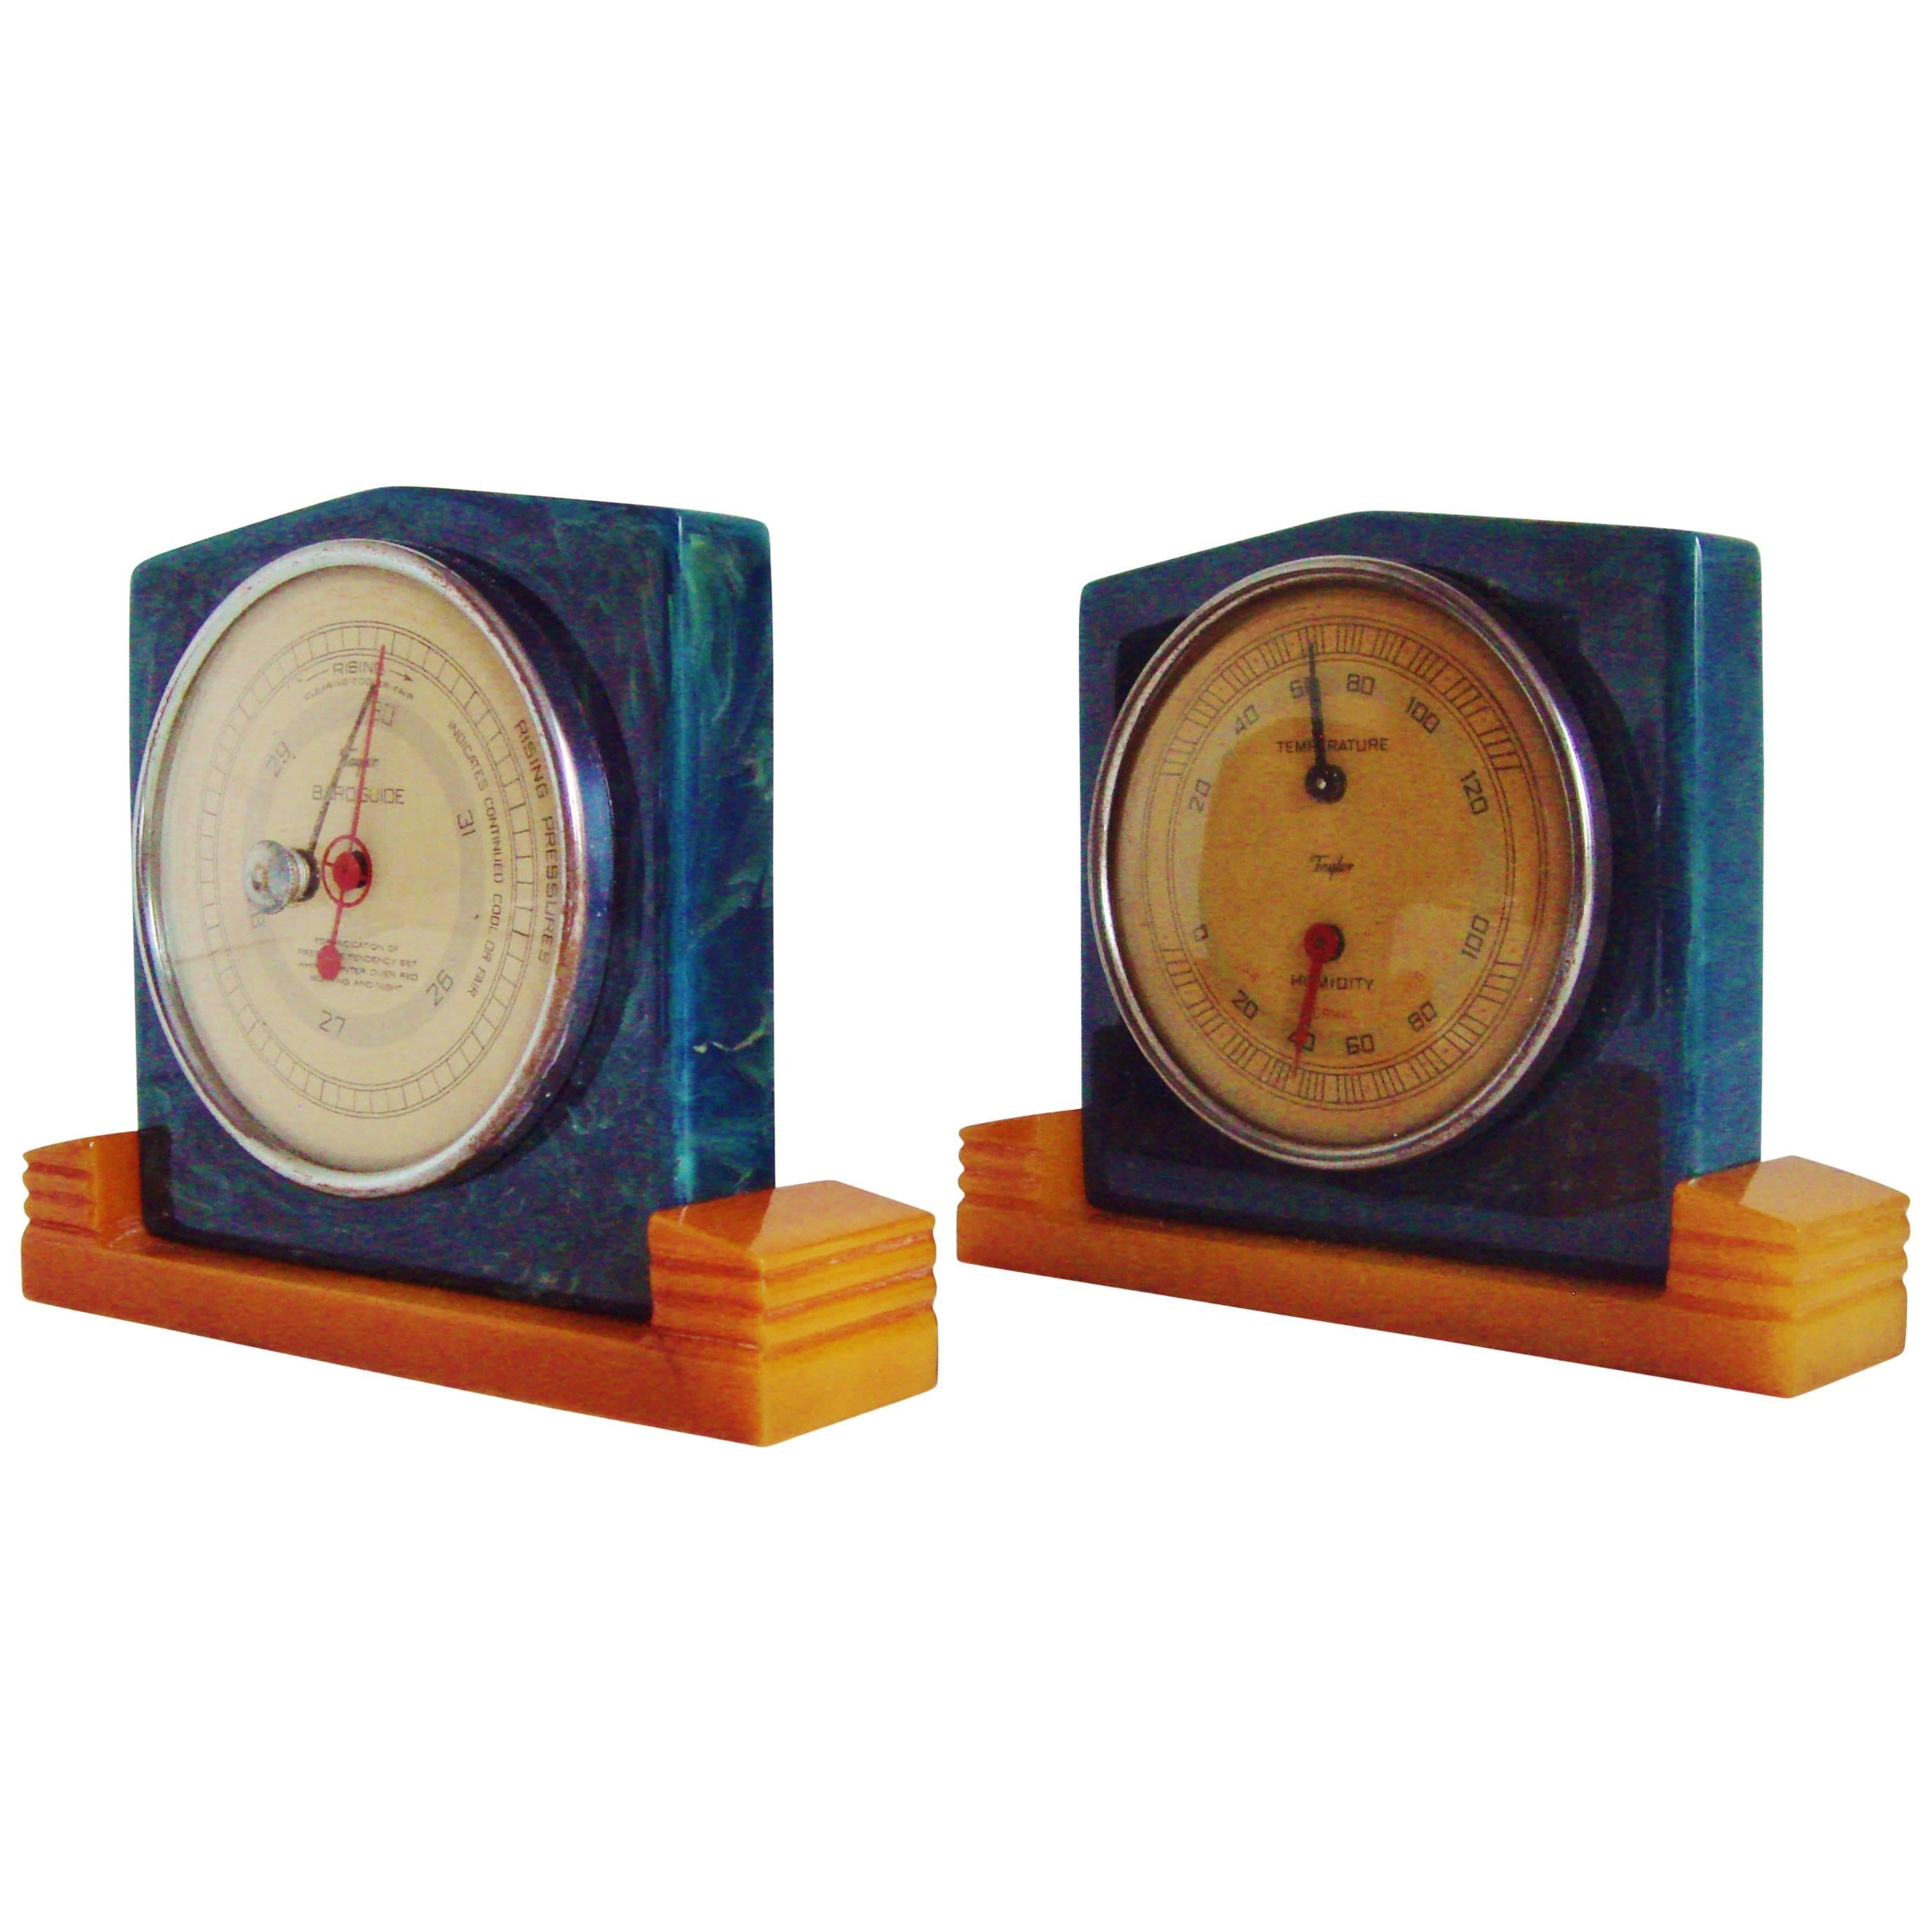 Rare American Art Deco Two-Tone Bakelite Desk Barometer and Hygrometer by Taylor